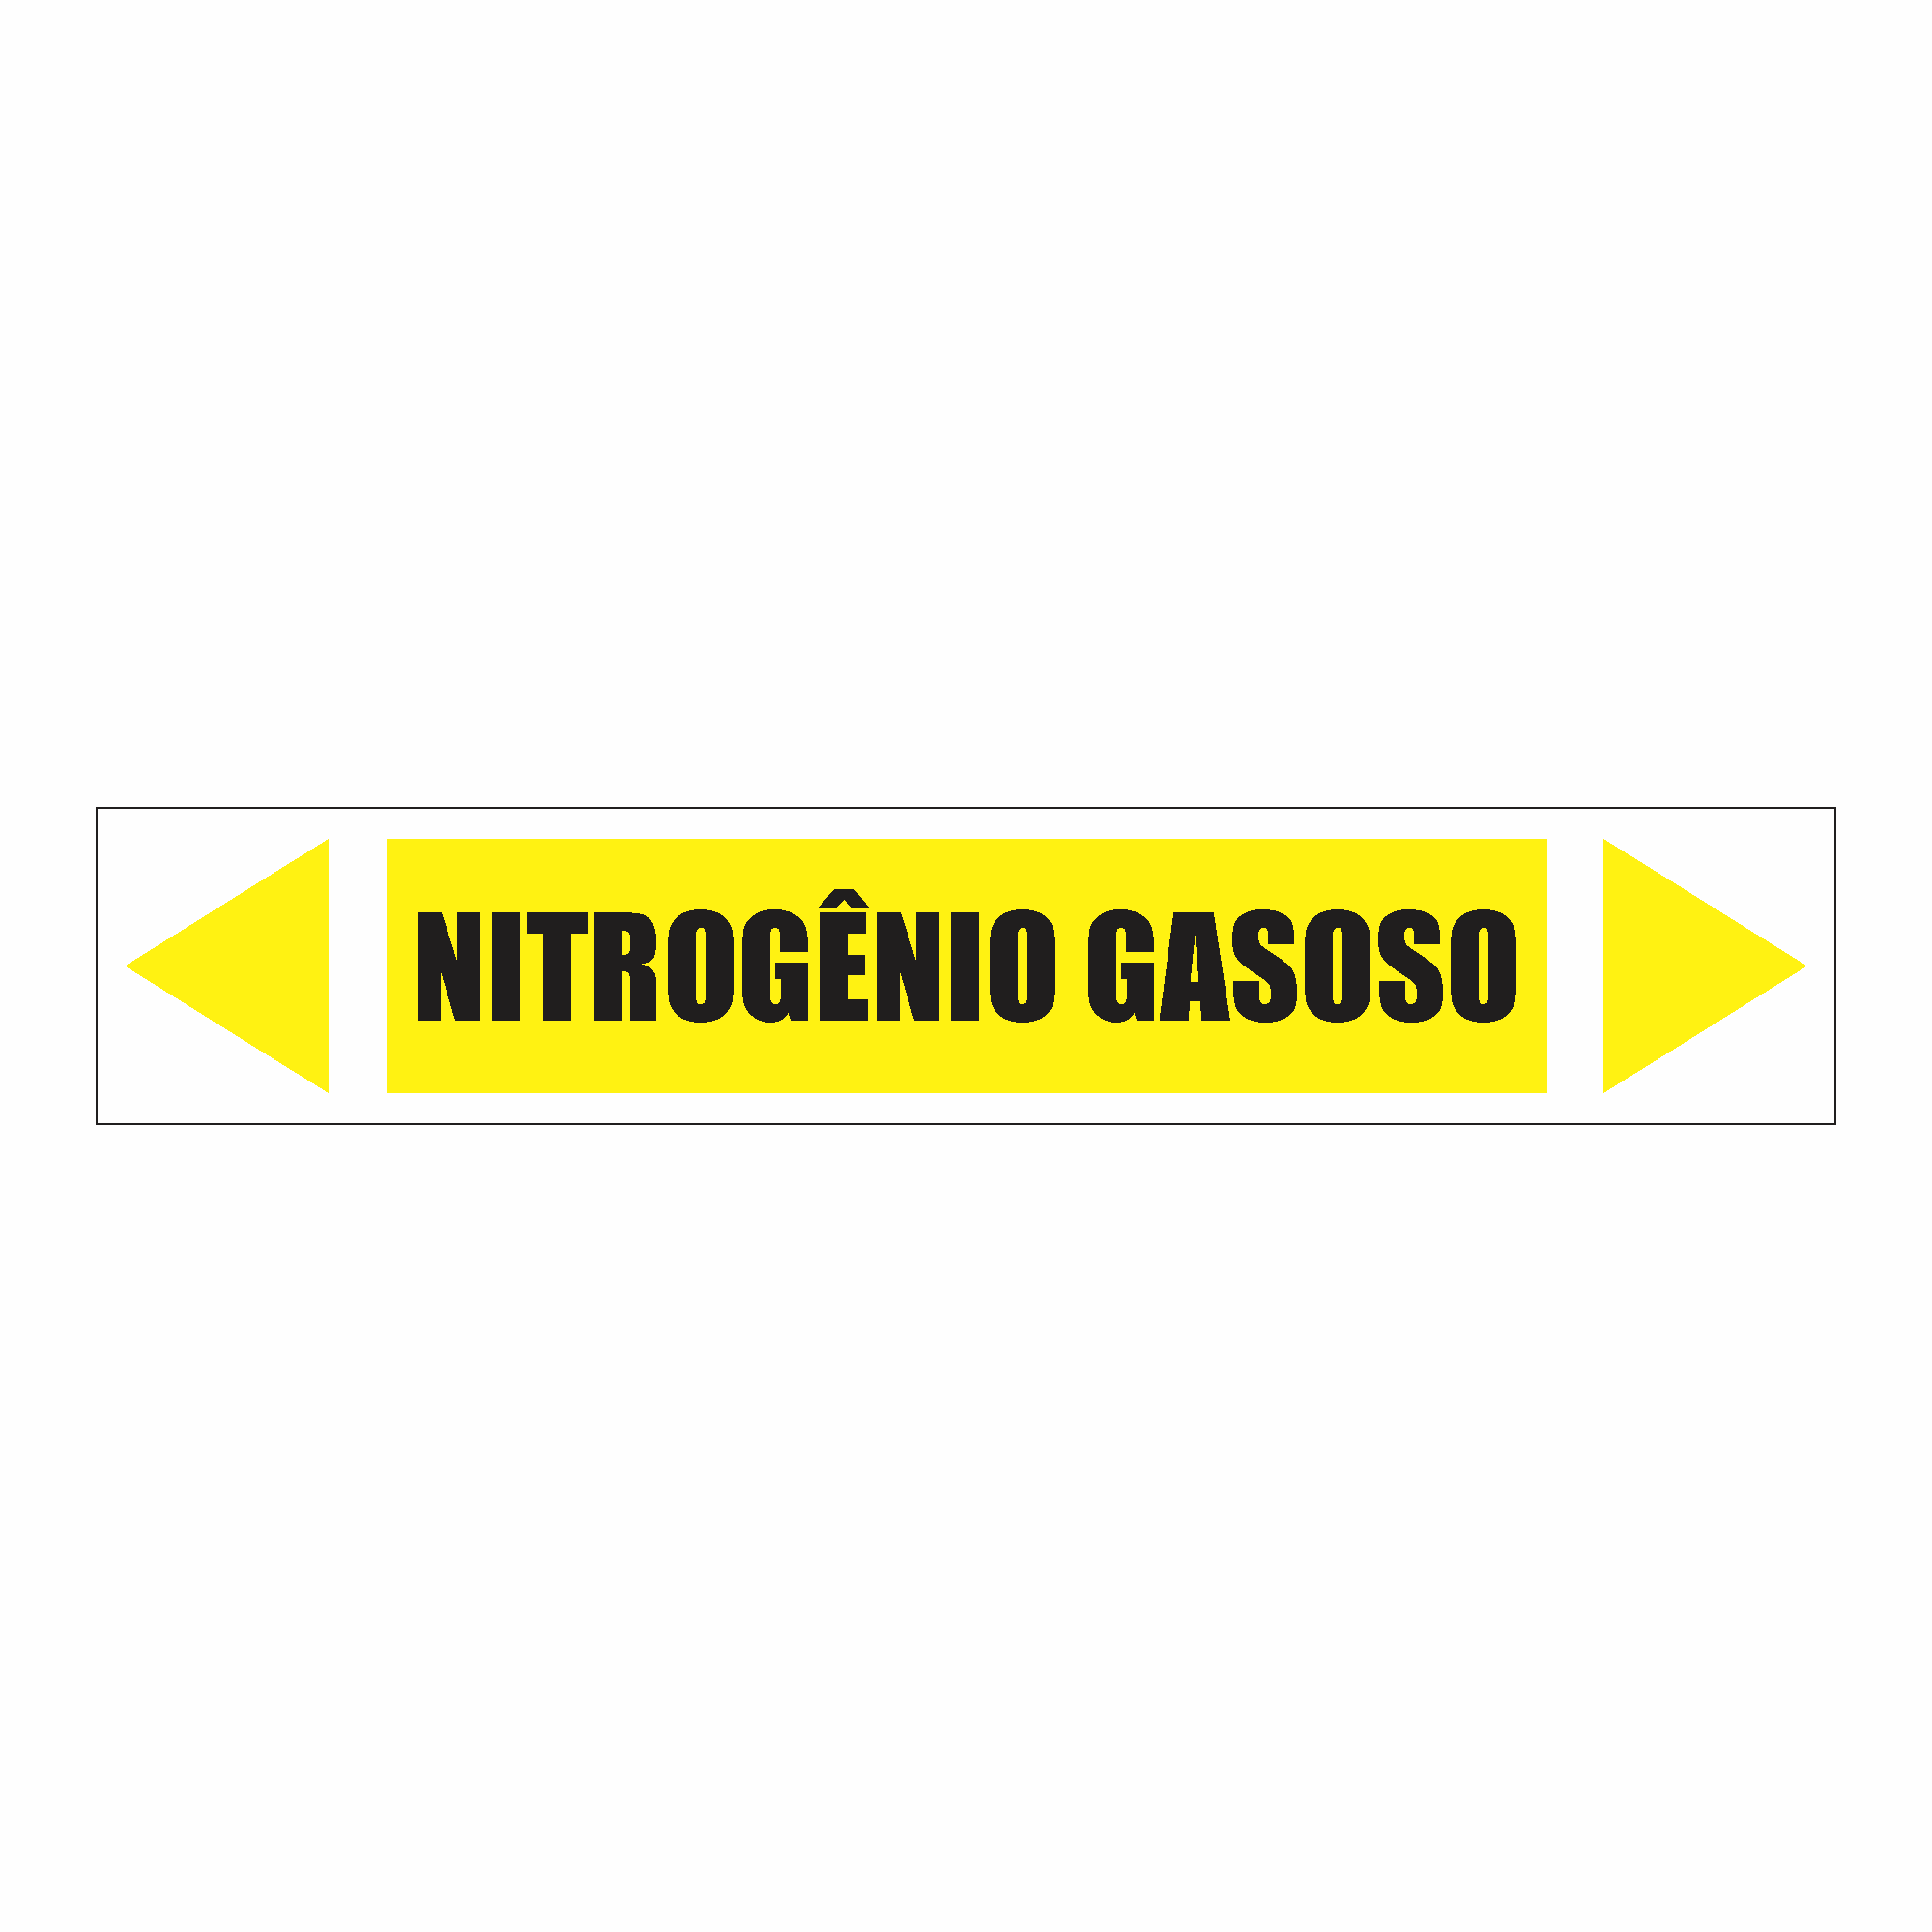 IDT 087 - Nitrogênio Gasoso